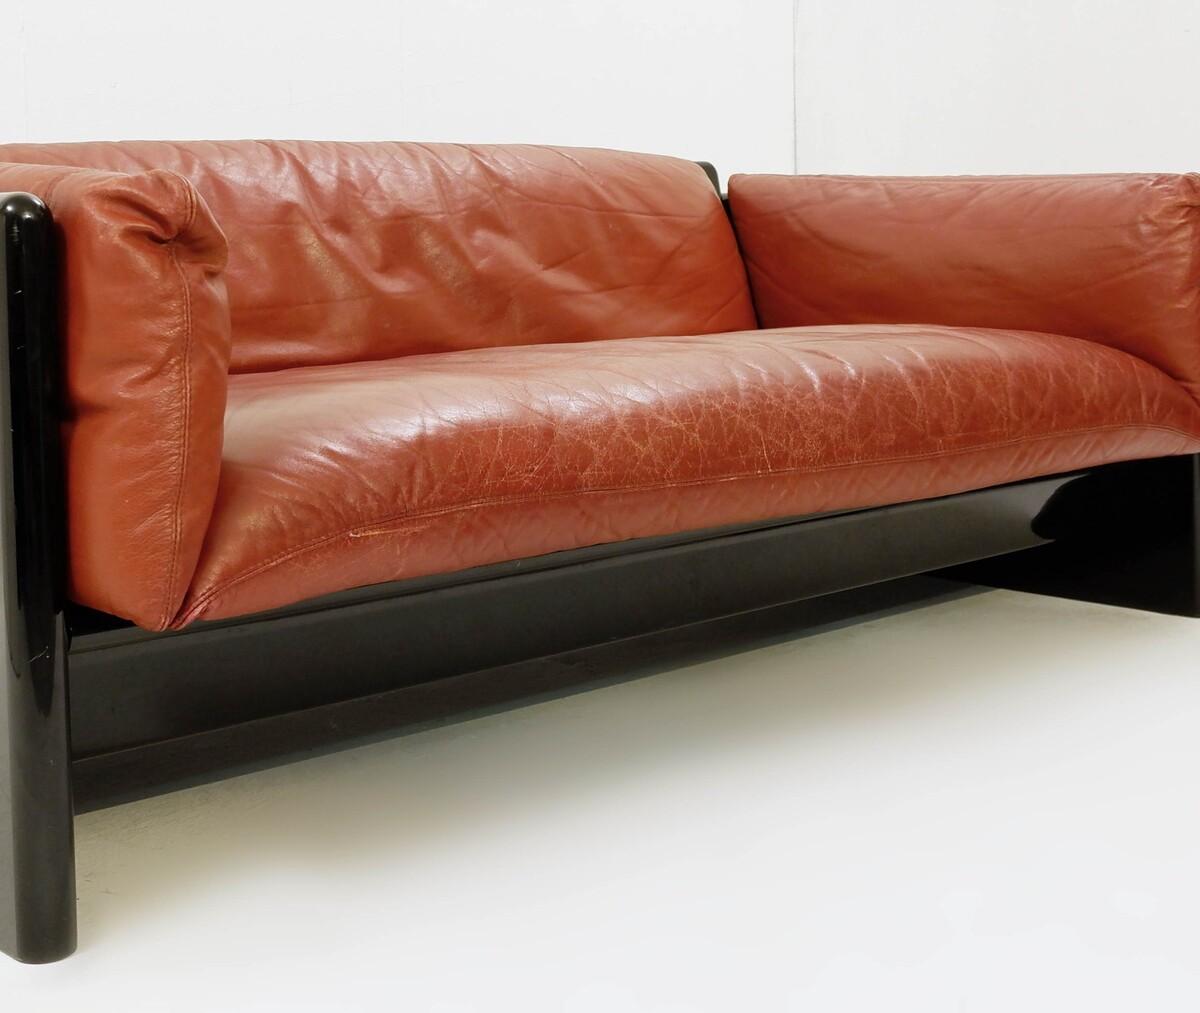 Late 20th Century 'Simone' Sofa by Dino Gavina for Studio Simon. Italy - 1970s